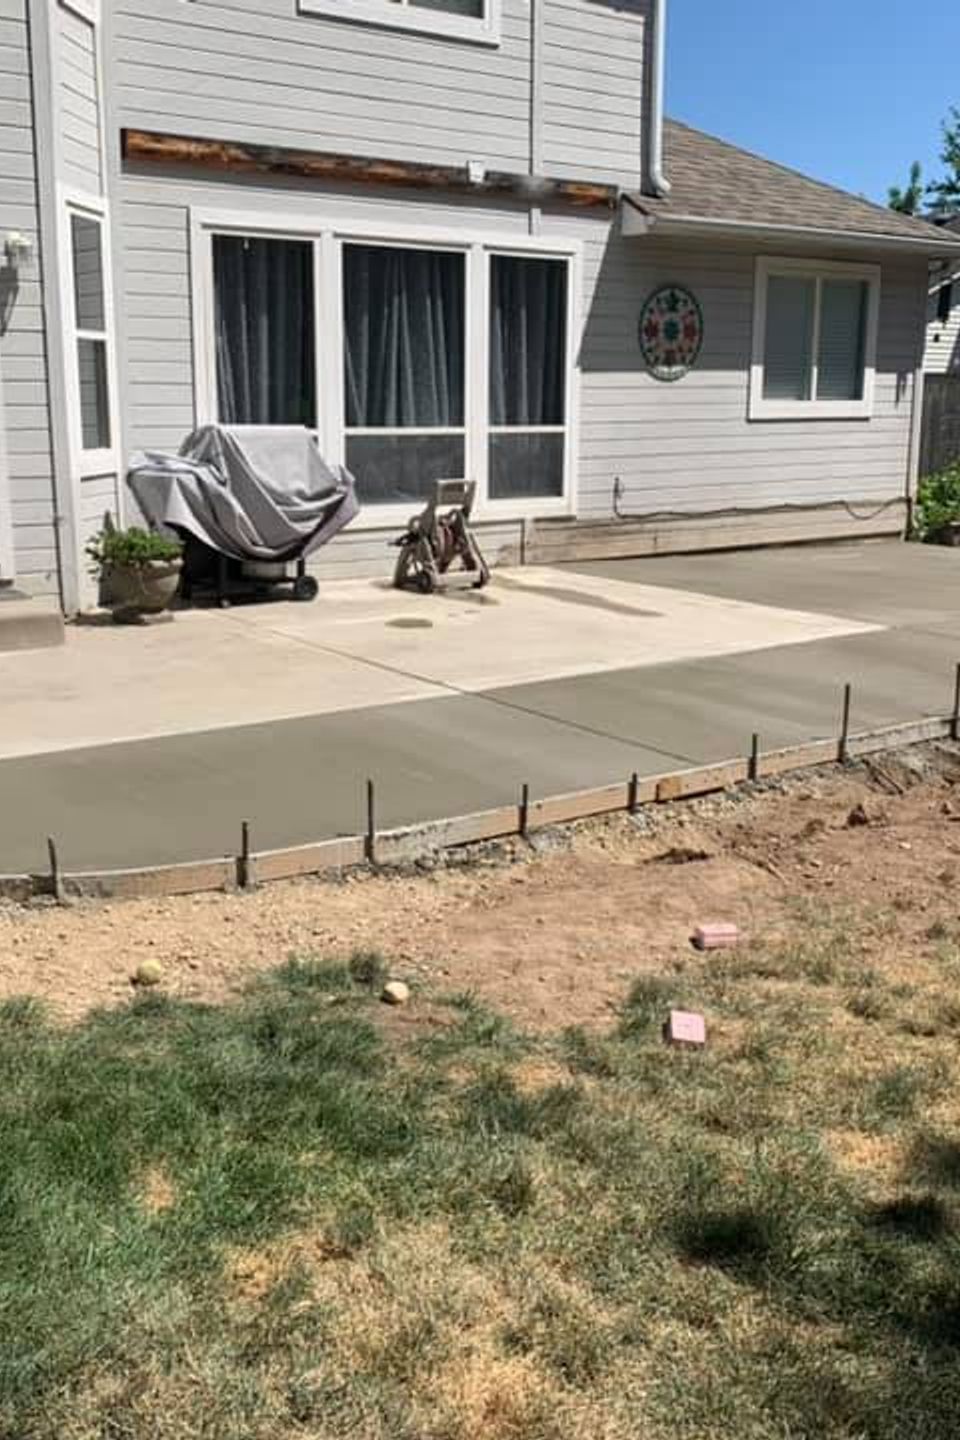 Setting up concrete patio in Boise Idaho